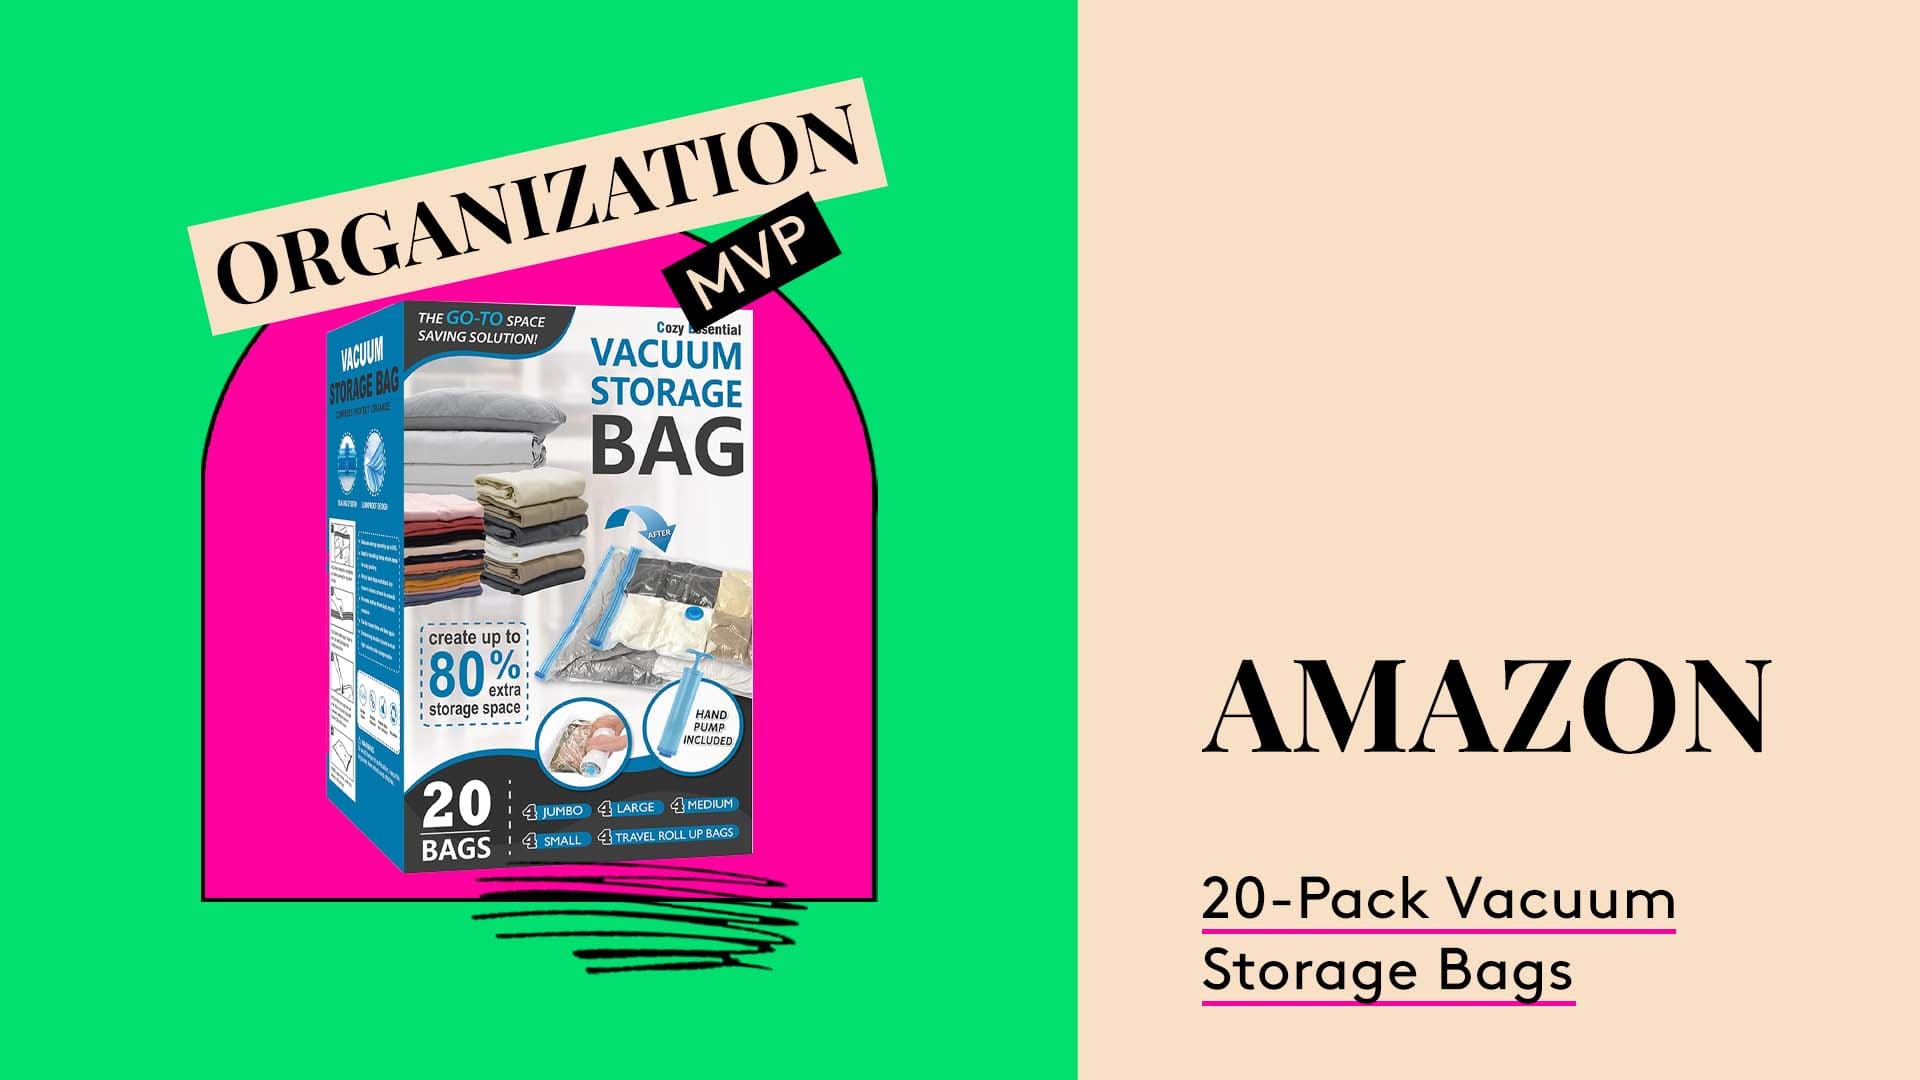 Organization MVP. Amazon 20-Pack Vacuum Storage Bags.